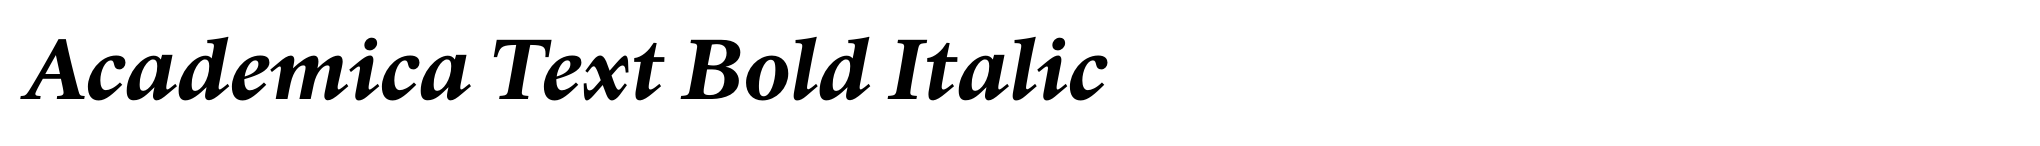 Academica Text Bold Italic image